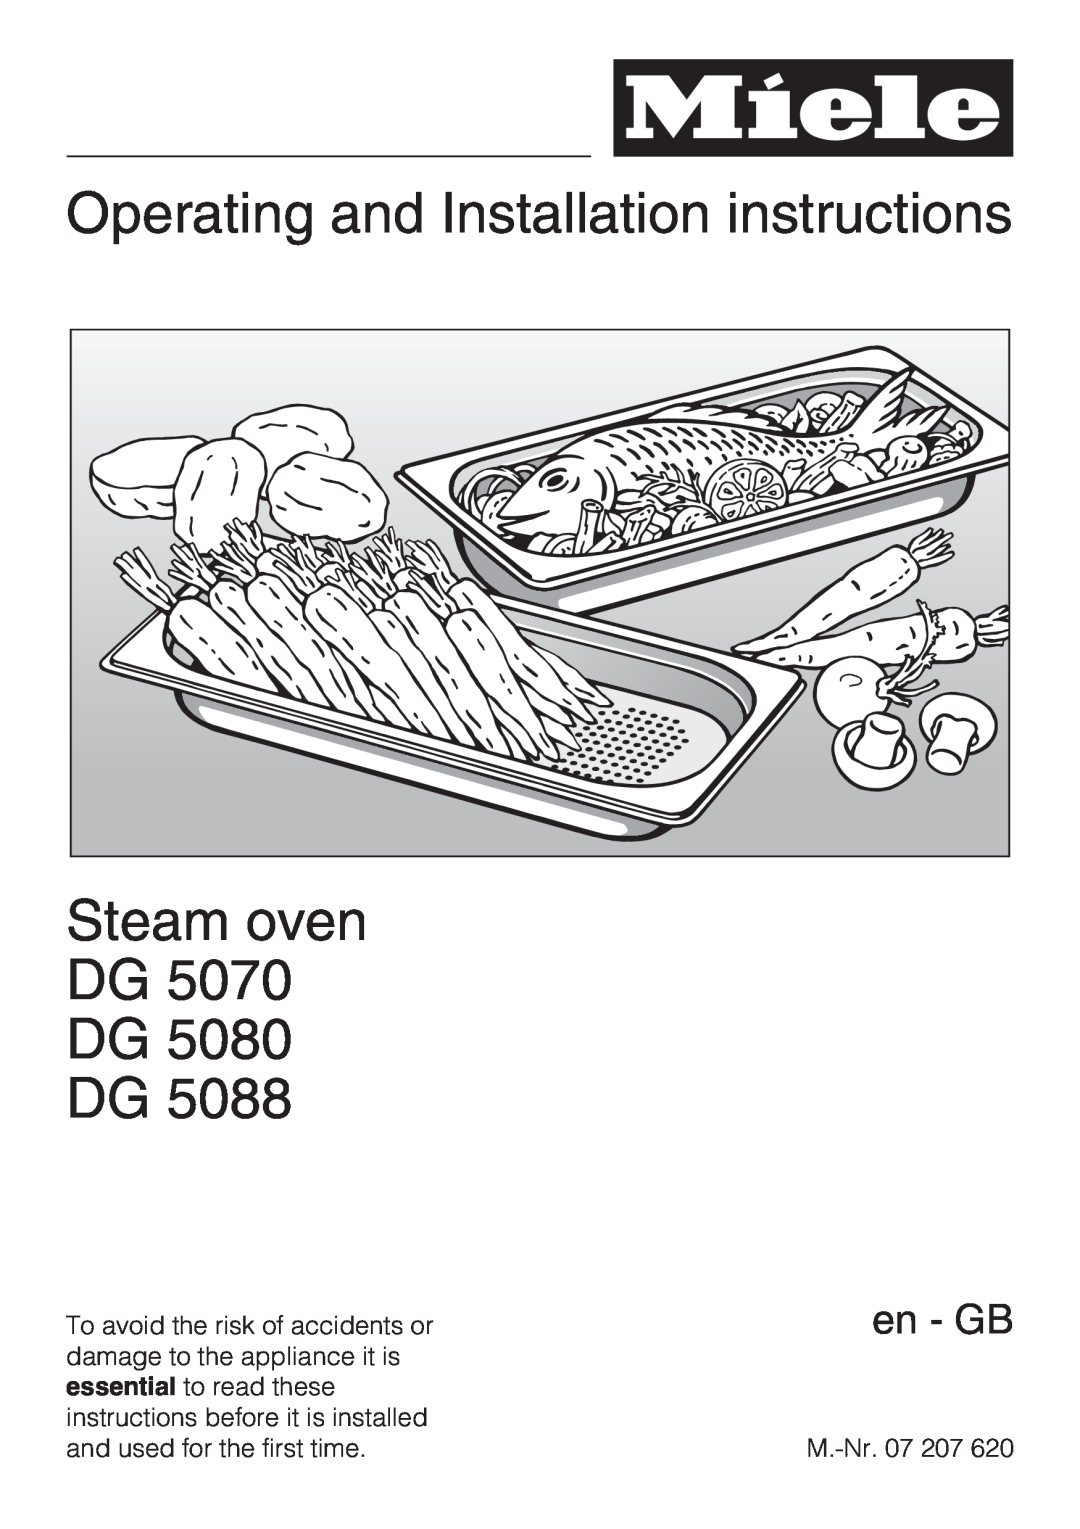 Miele DG 5088, DG 5070 installation instructions Operating and Installation instructions Steam oven DG DG DG, en - GB 